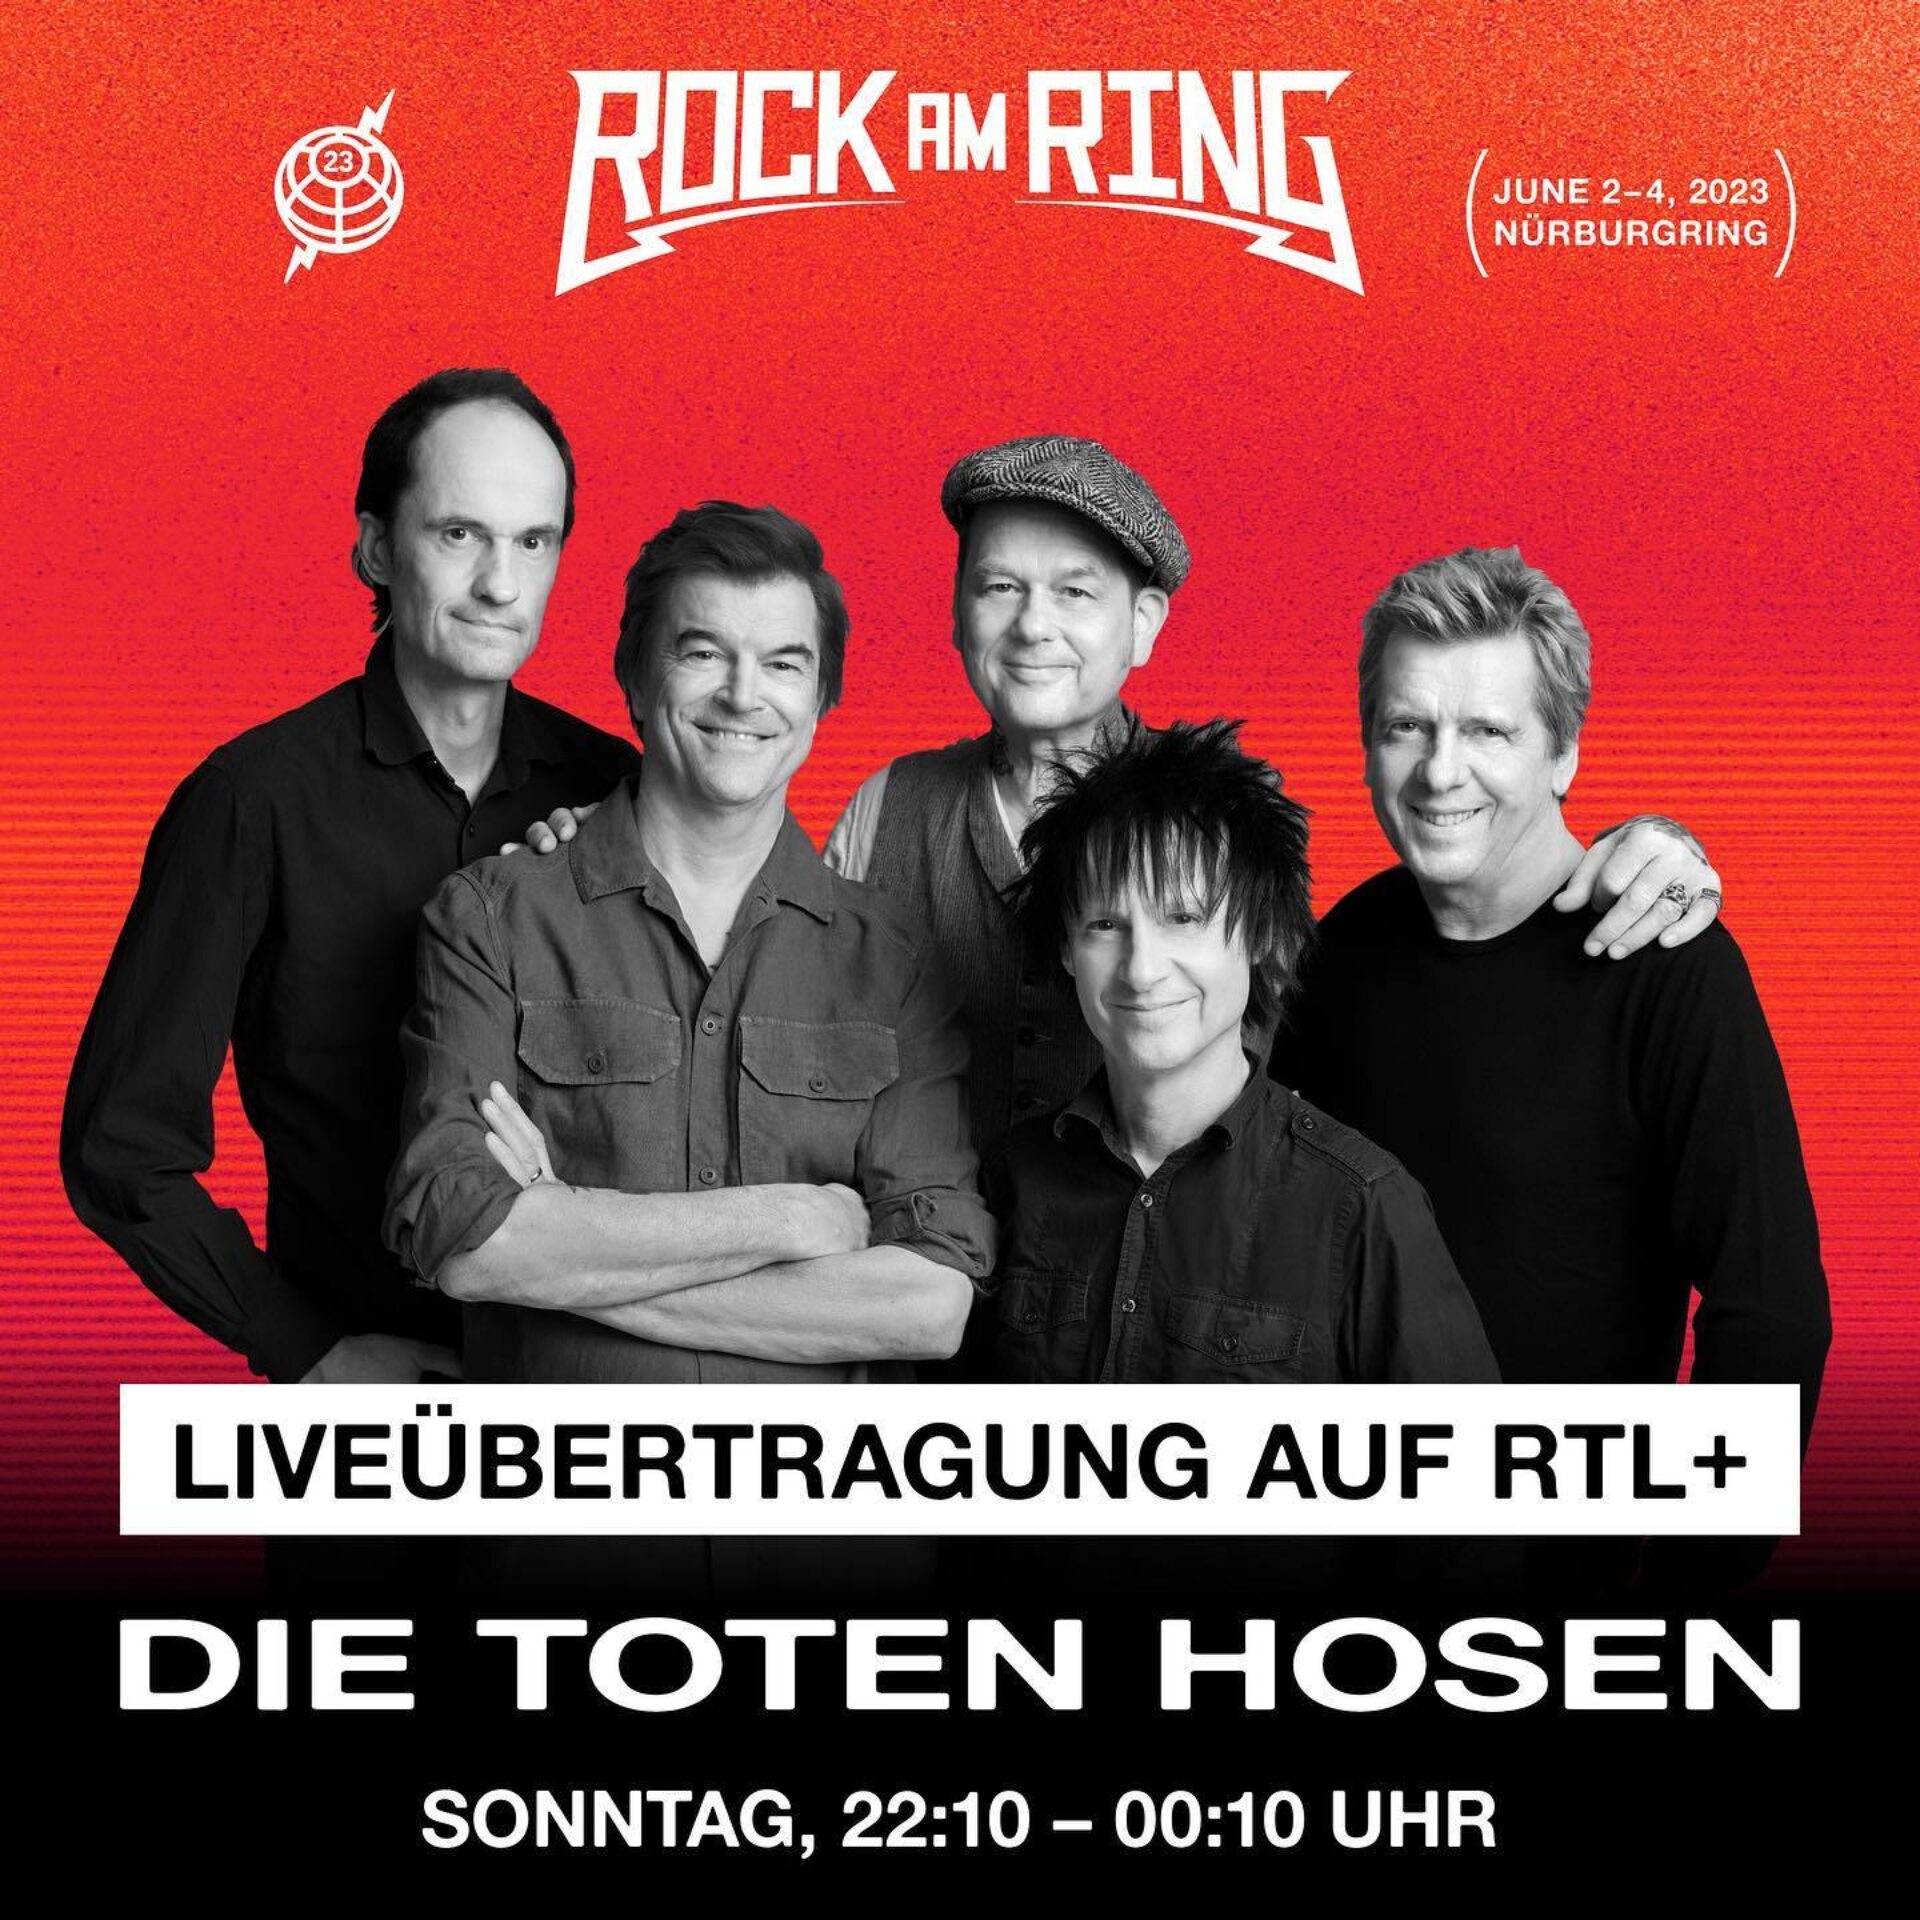 Rock am Ring Konzert im Livestream bei RTL+